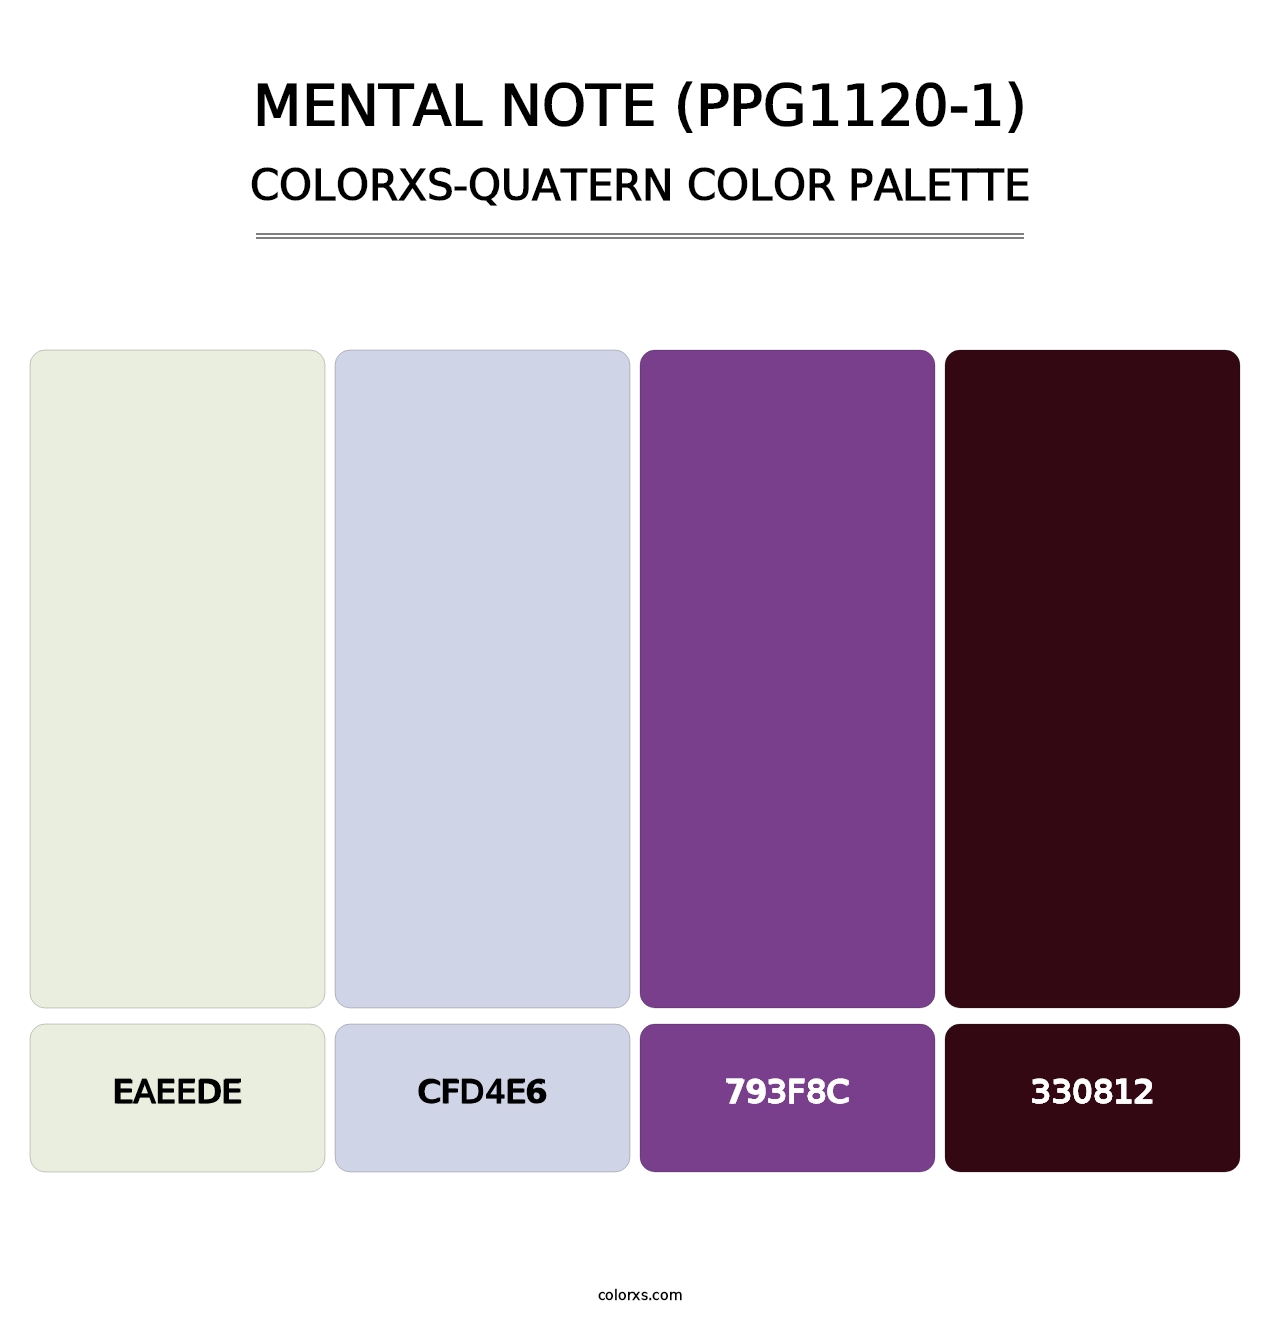 Mental Note (PPG1120-1) - Colorxs Quatern Palette